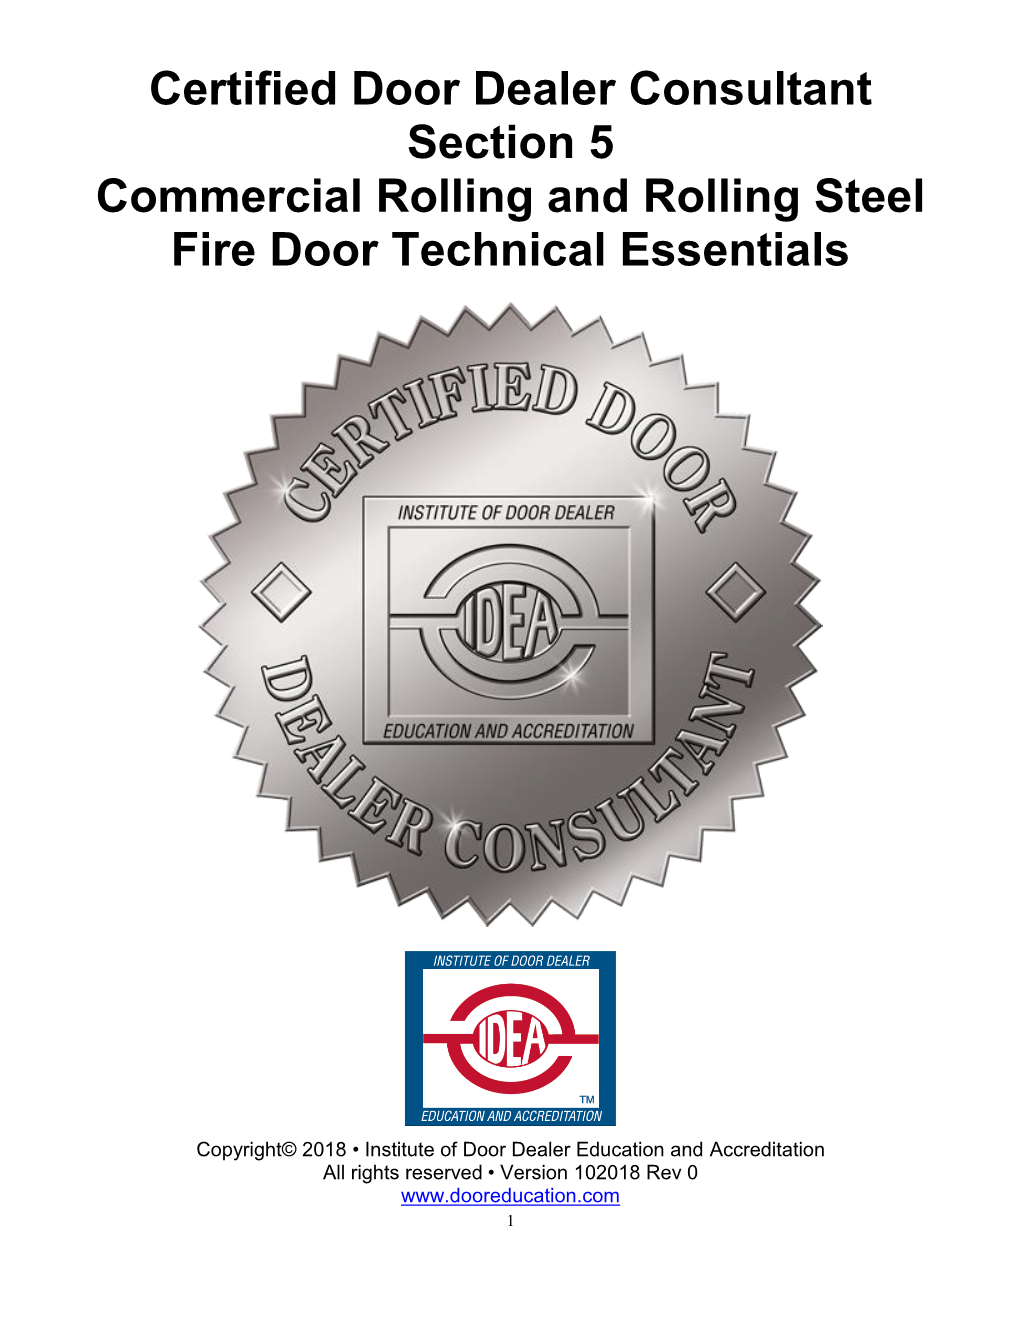 Commercial Rolling and Rolling Steel Fire Door Technical Essentials